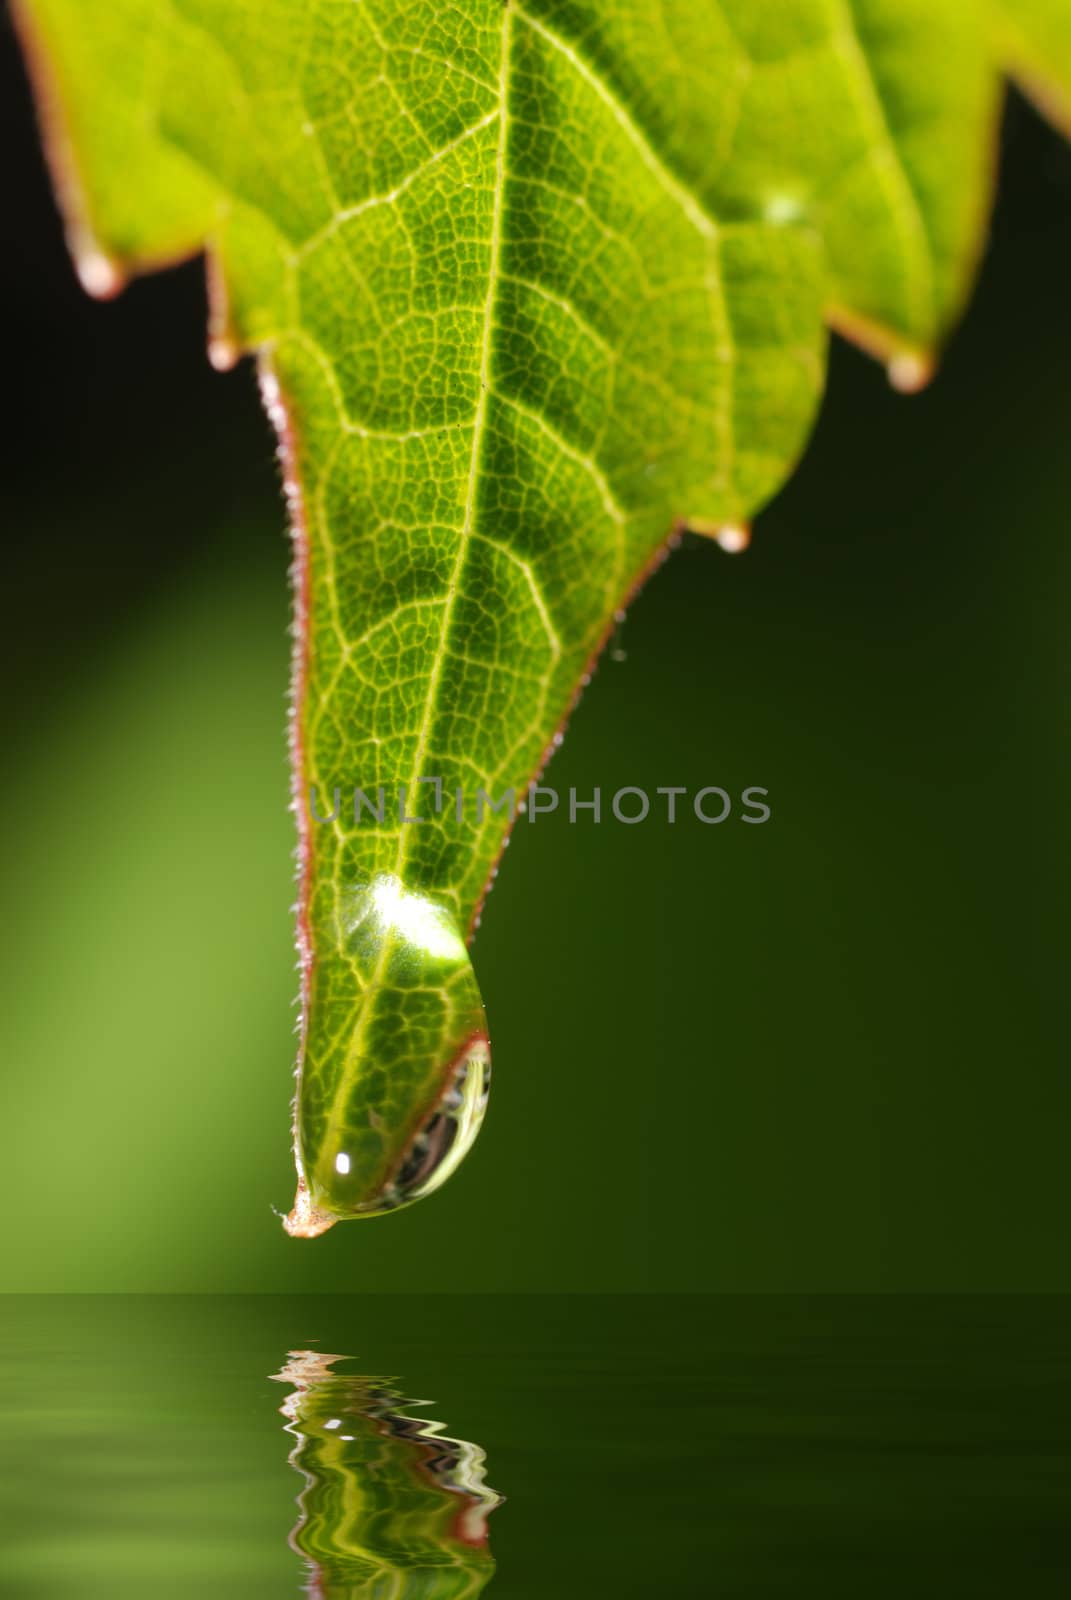 drops on a leaf by galdzer